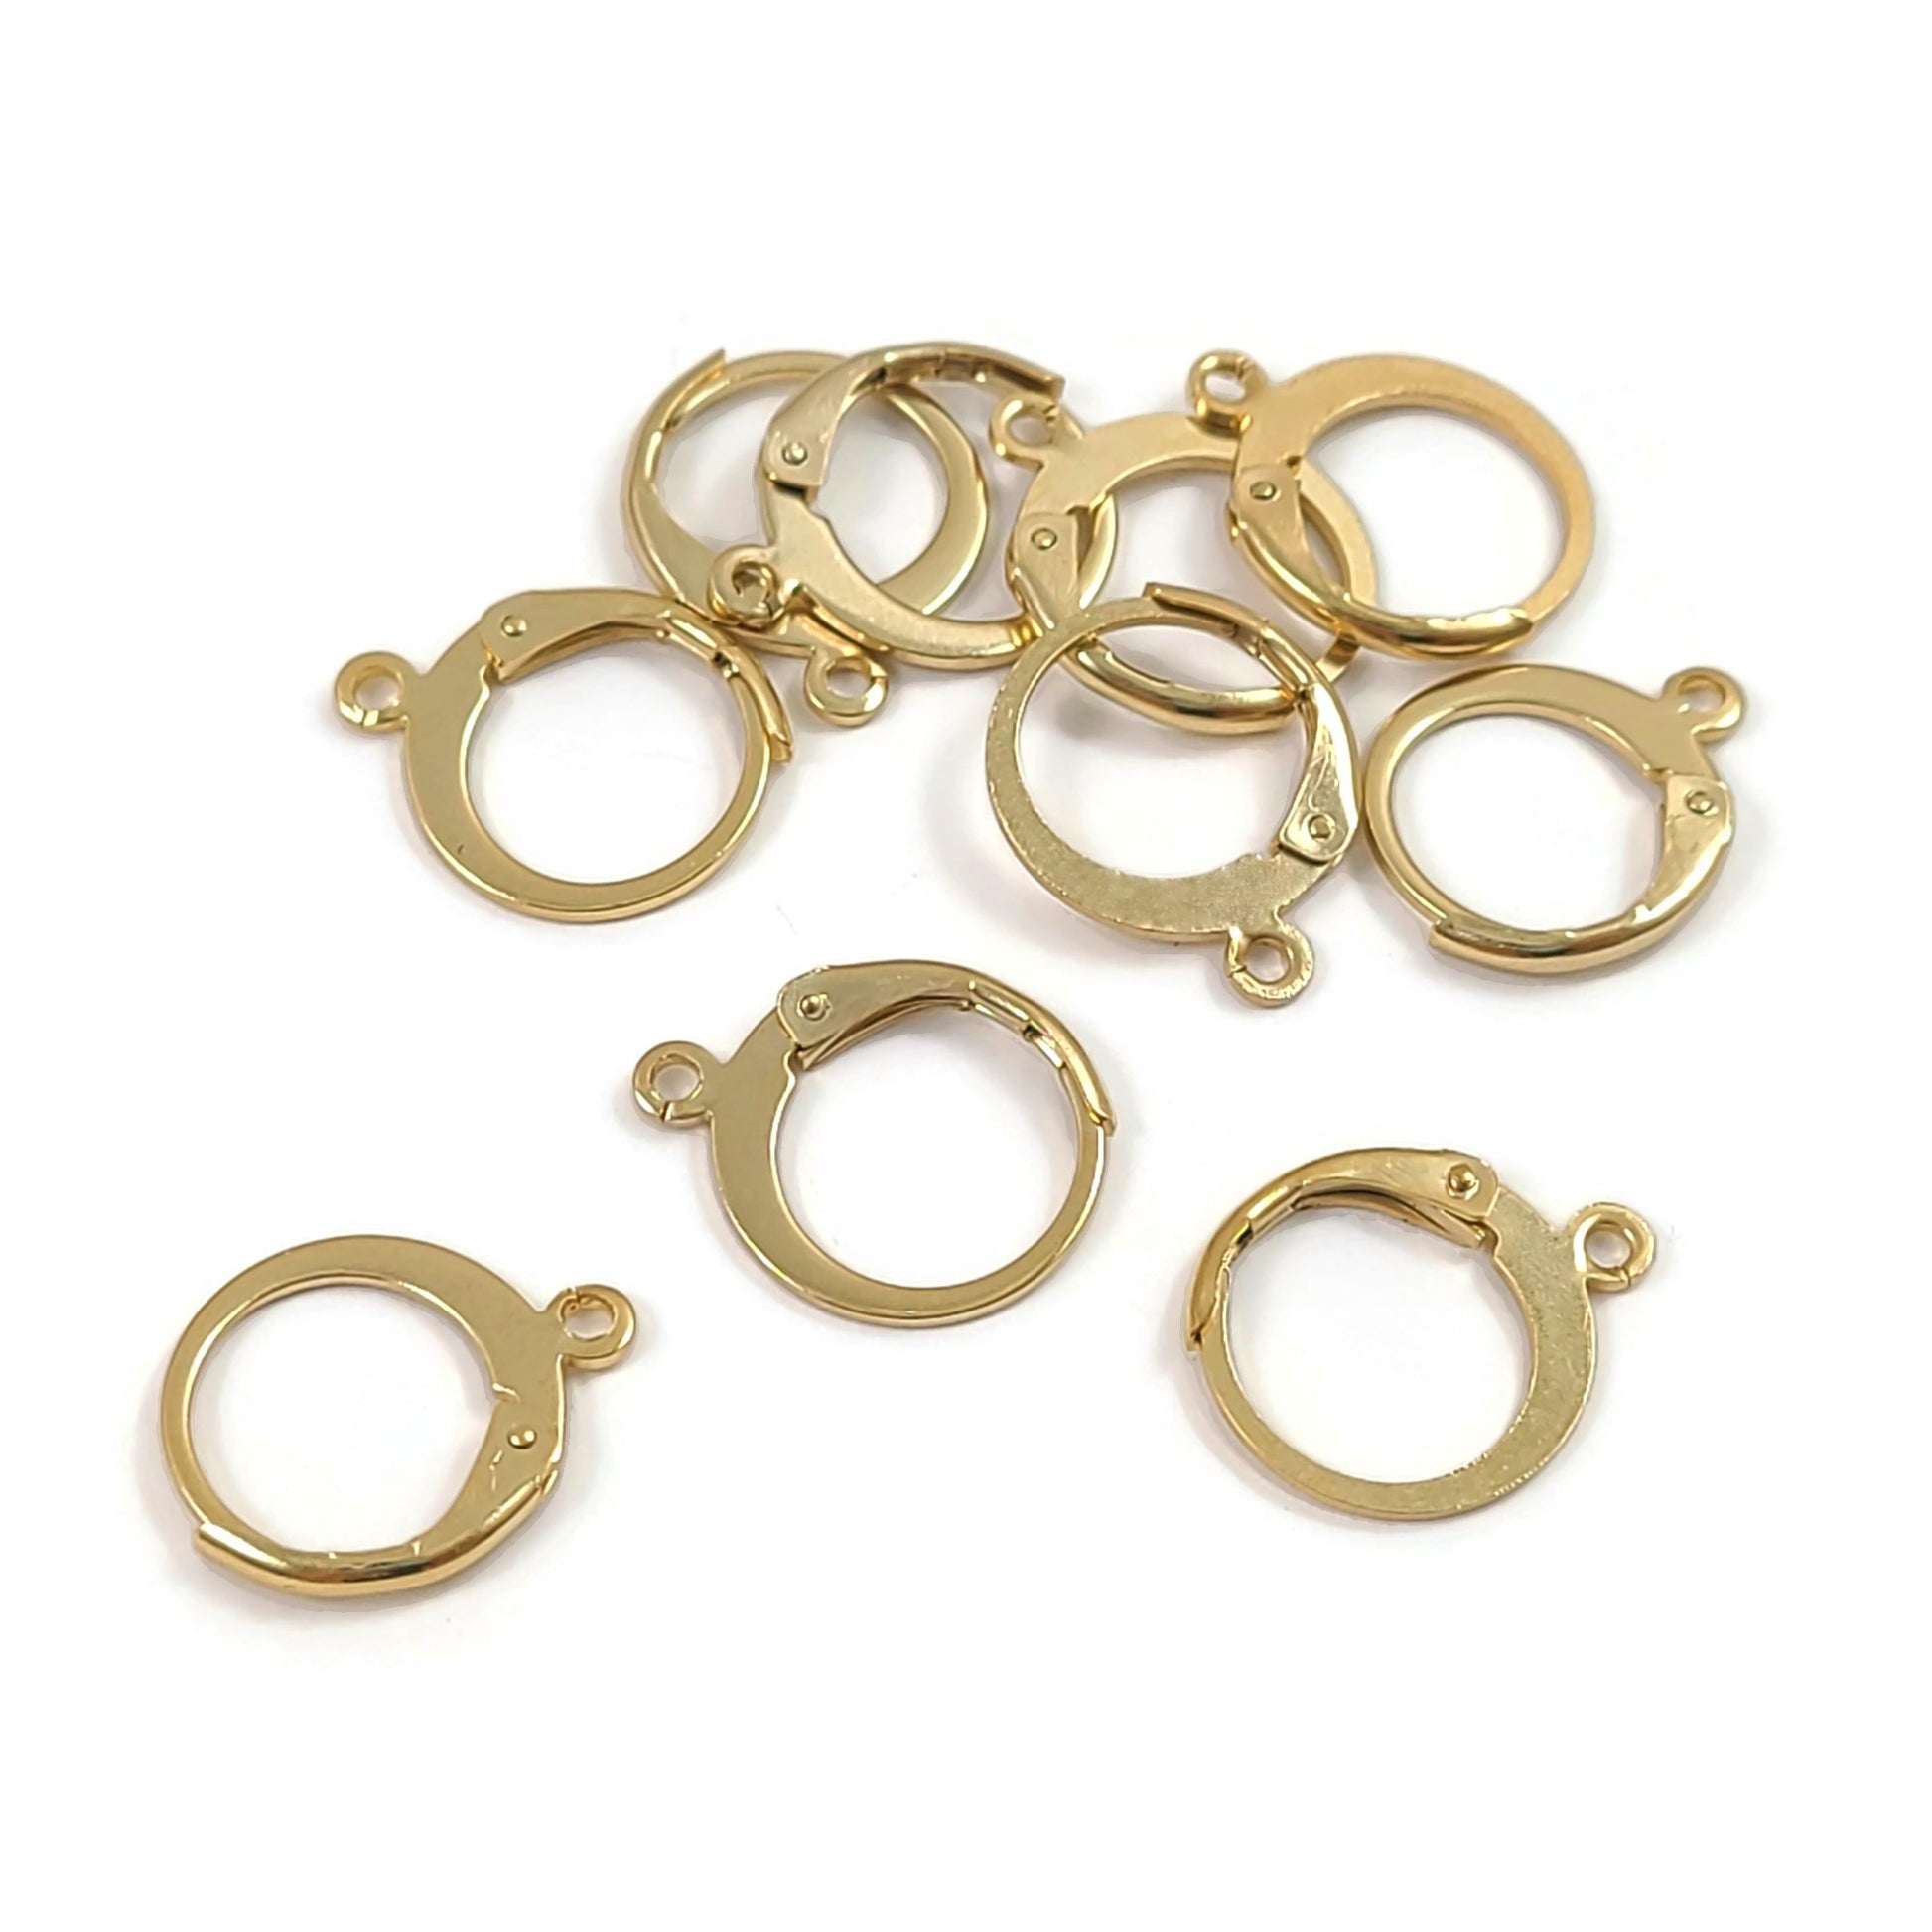 24K Gold plated round lever back, Stainless steel hoop earring hooks